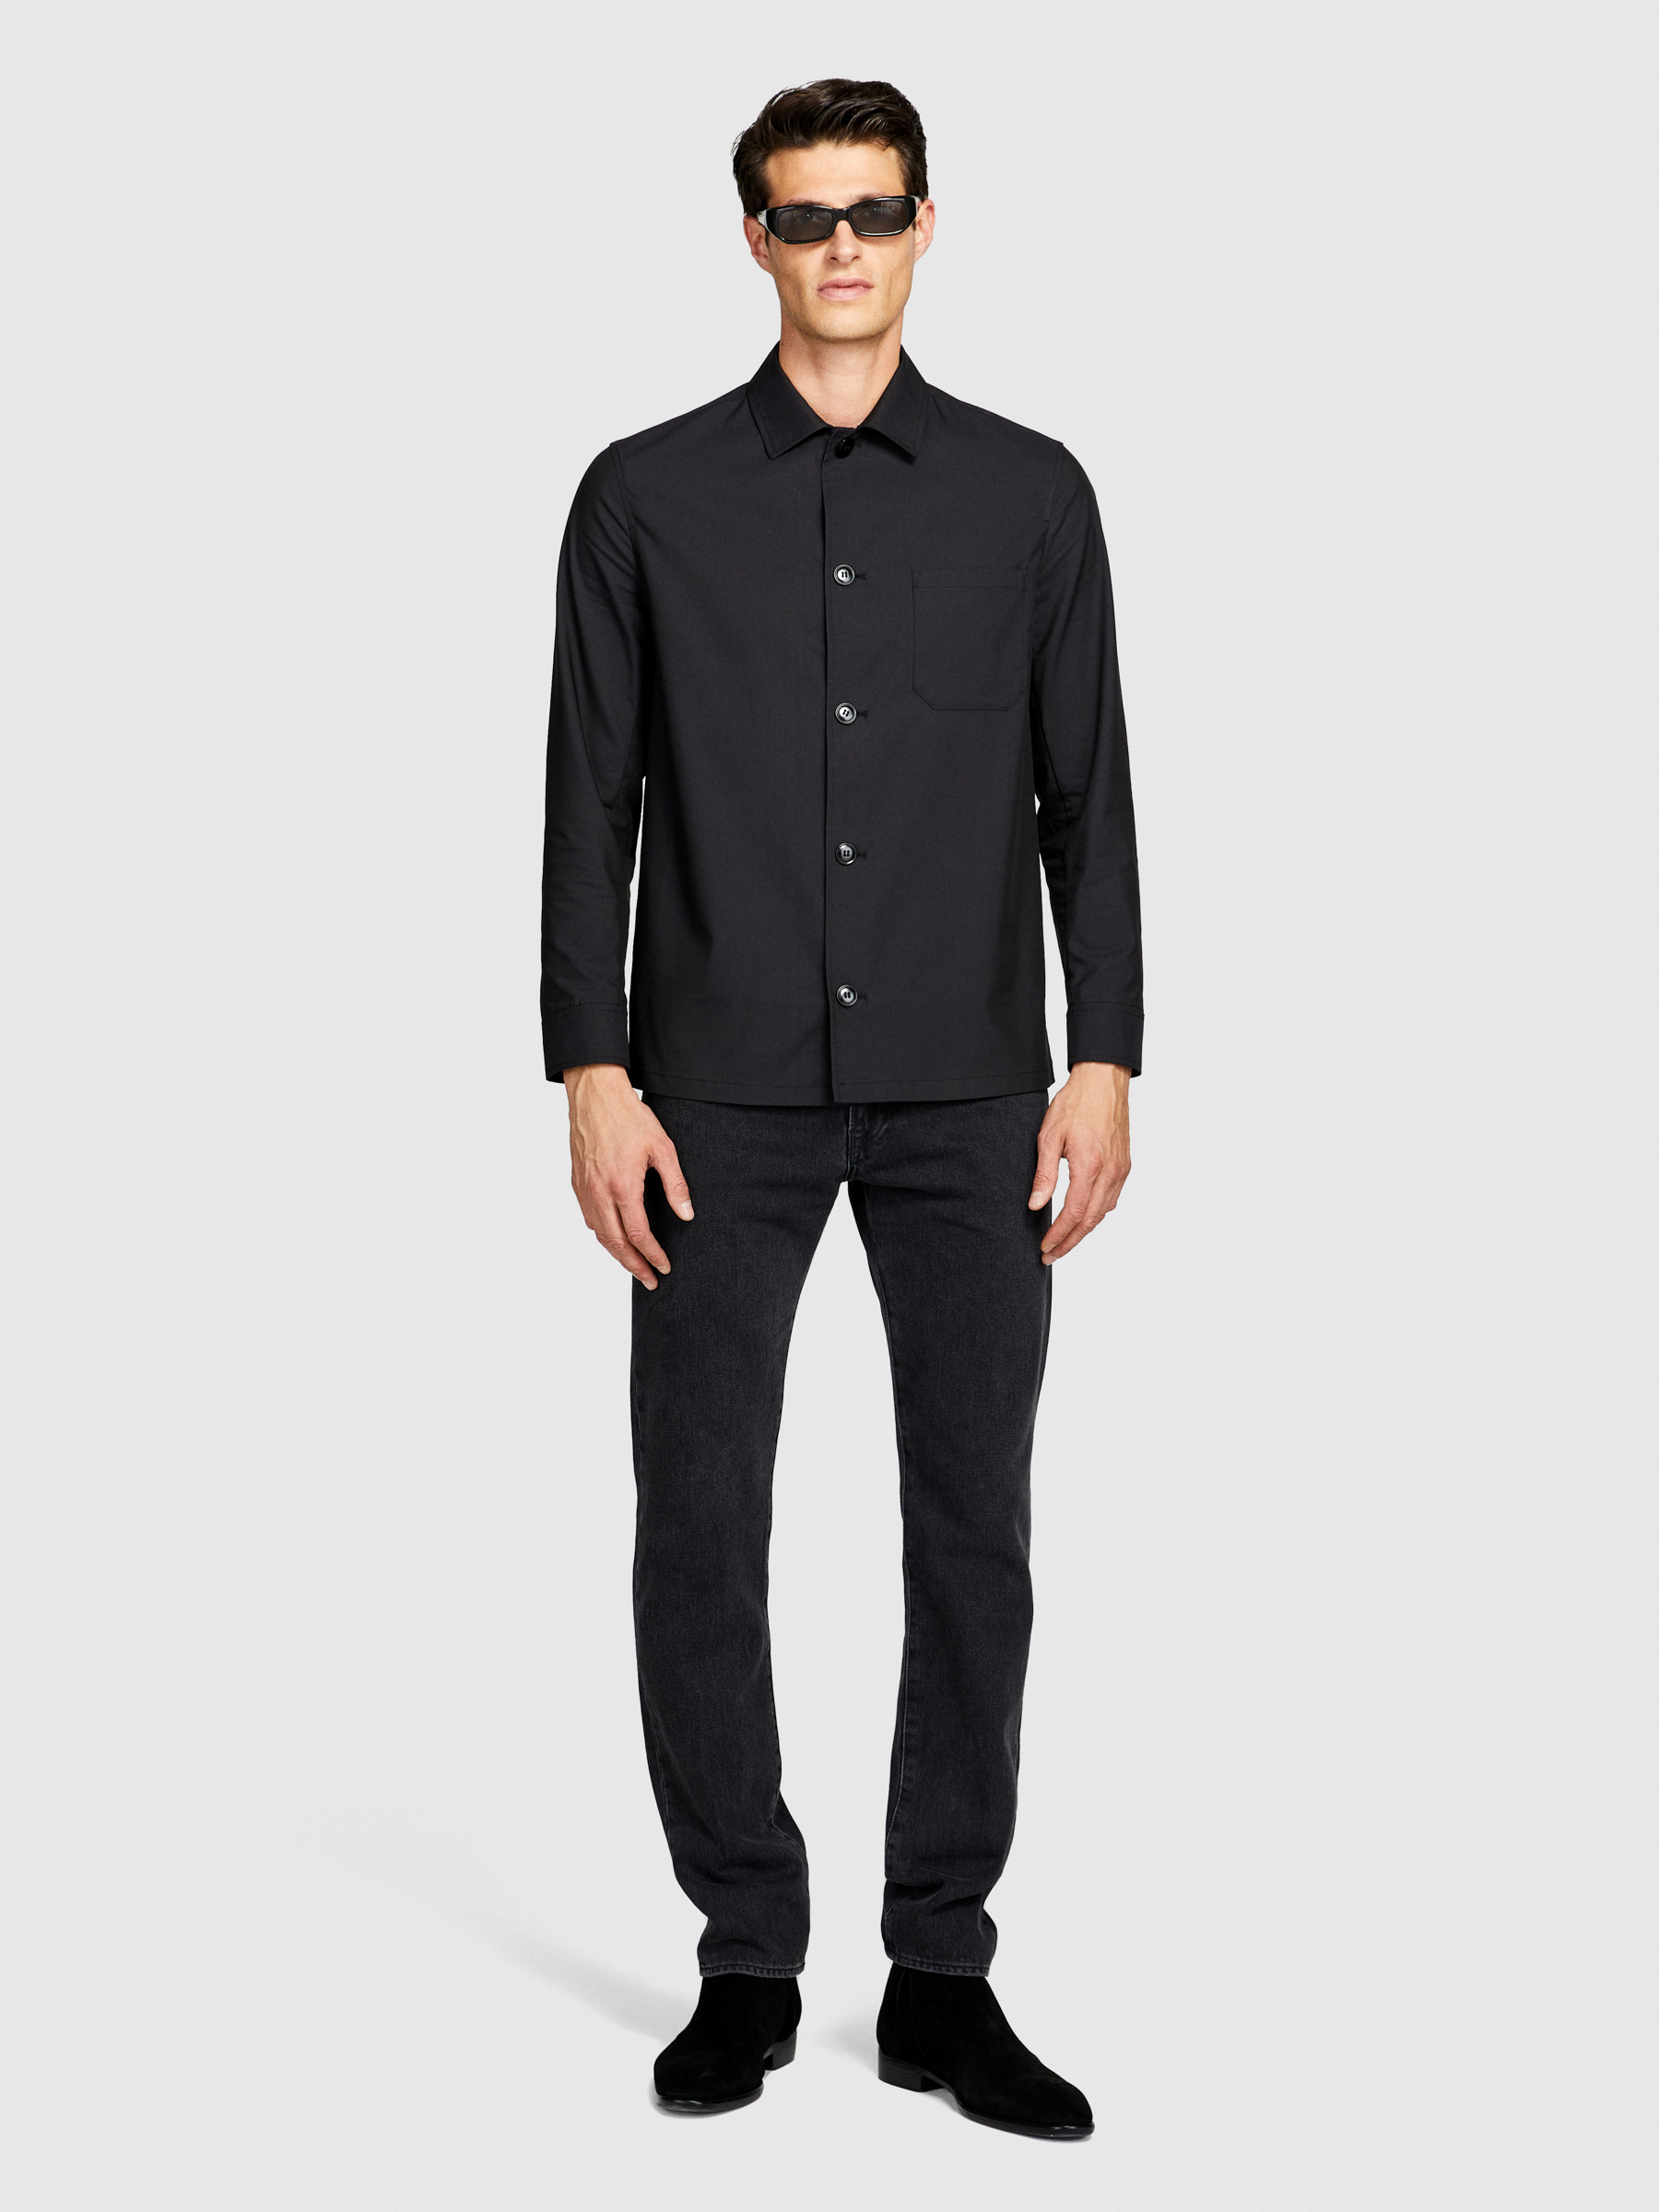 Sisley - Technical Shirt Jacket, Man, Black, Size: S